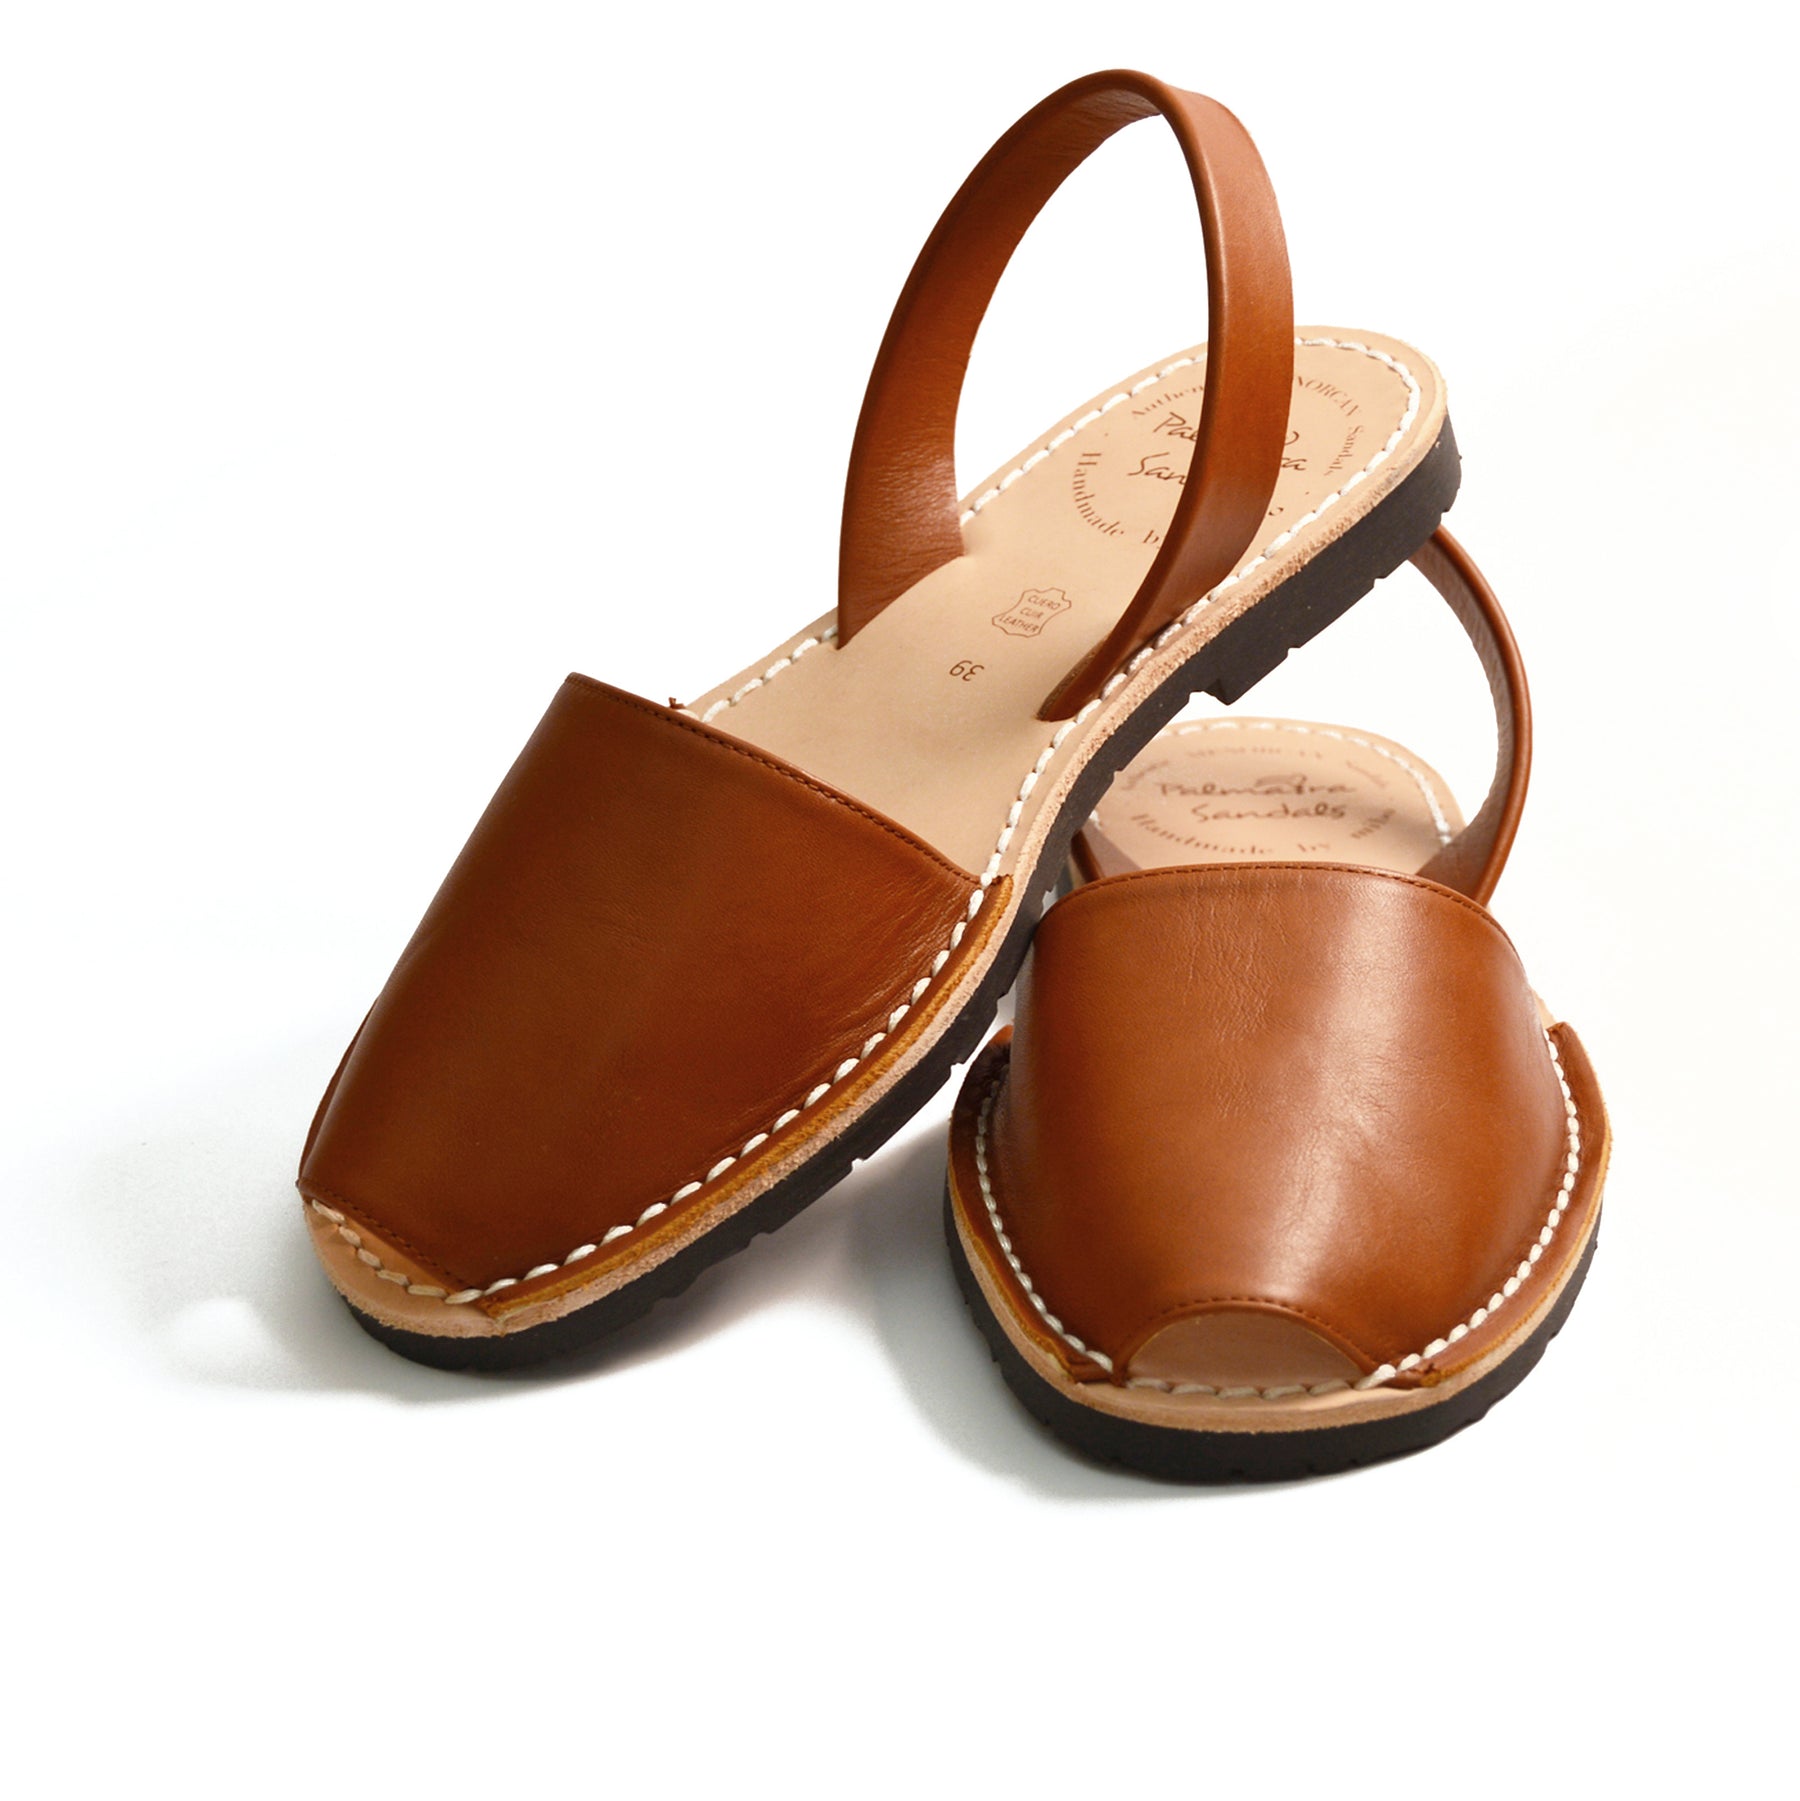 deep tan leather spanish menorcan avarcas sandals